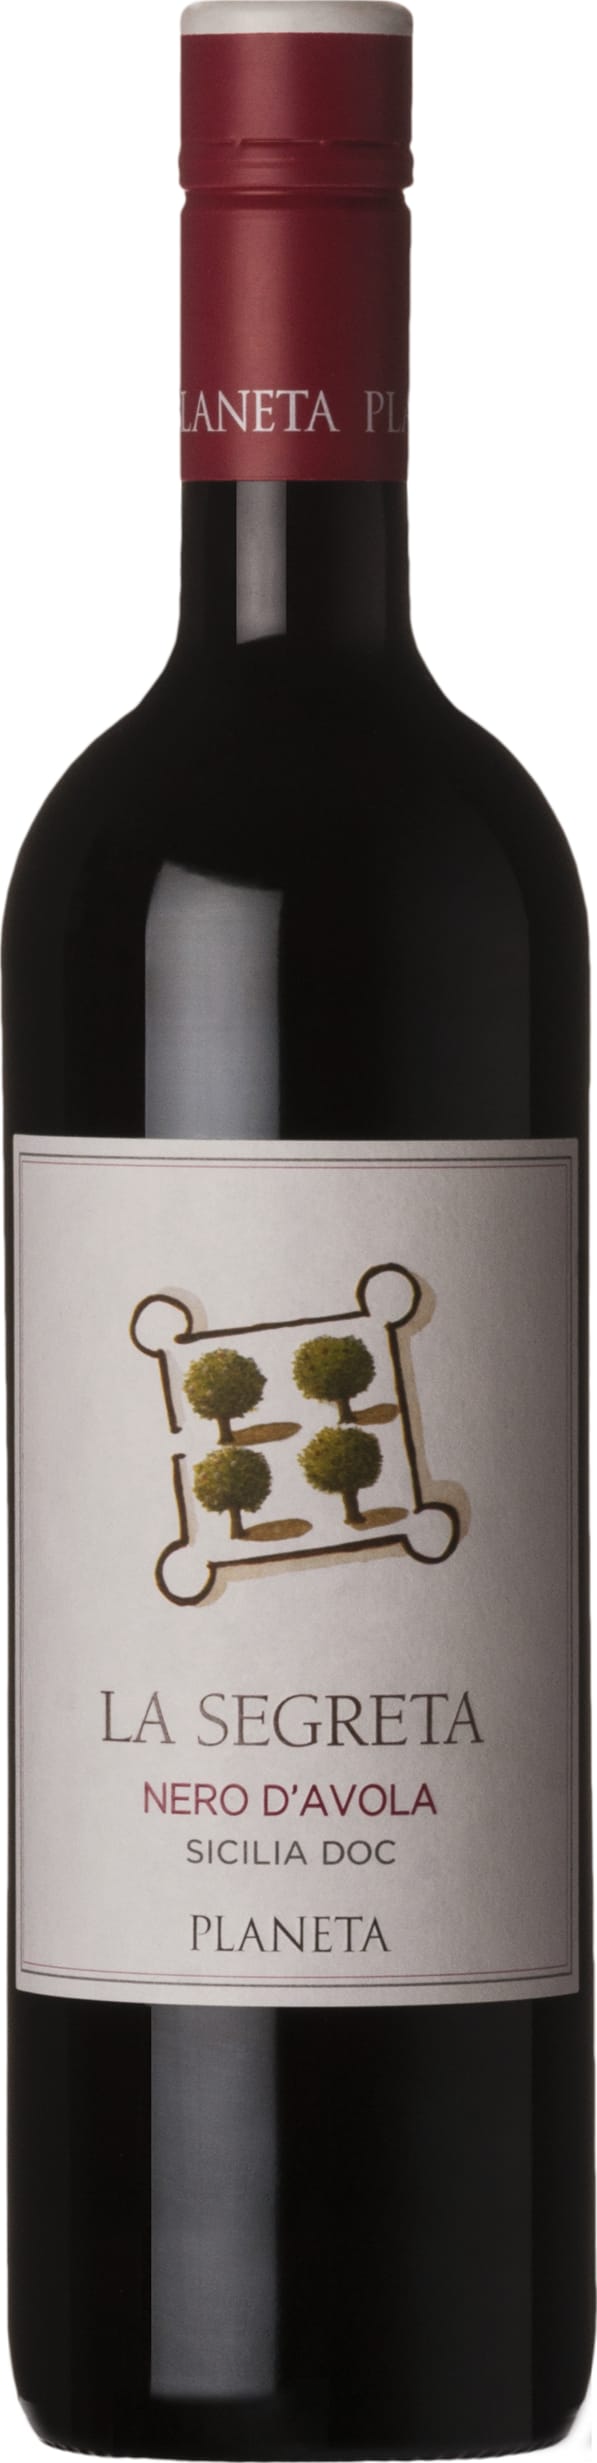 Planeta La Segreta Nero d'Avola 2021 75cl - Buy Planeta Wines from GREAT WINES DIRECT wine shop